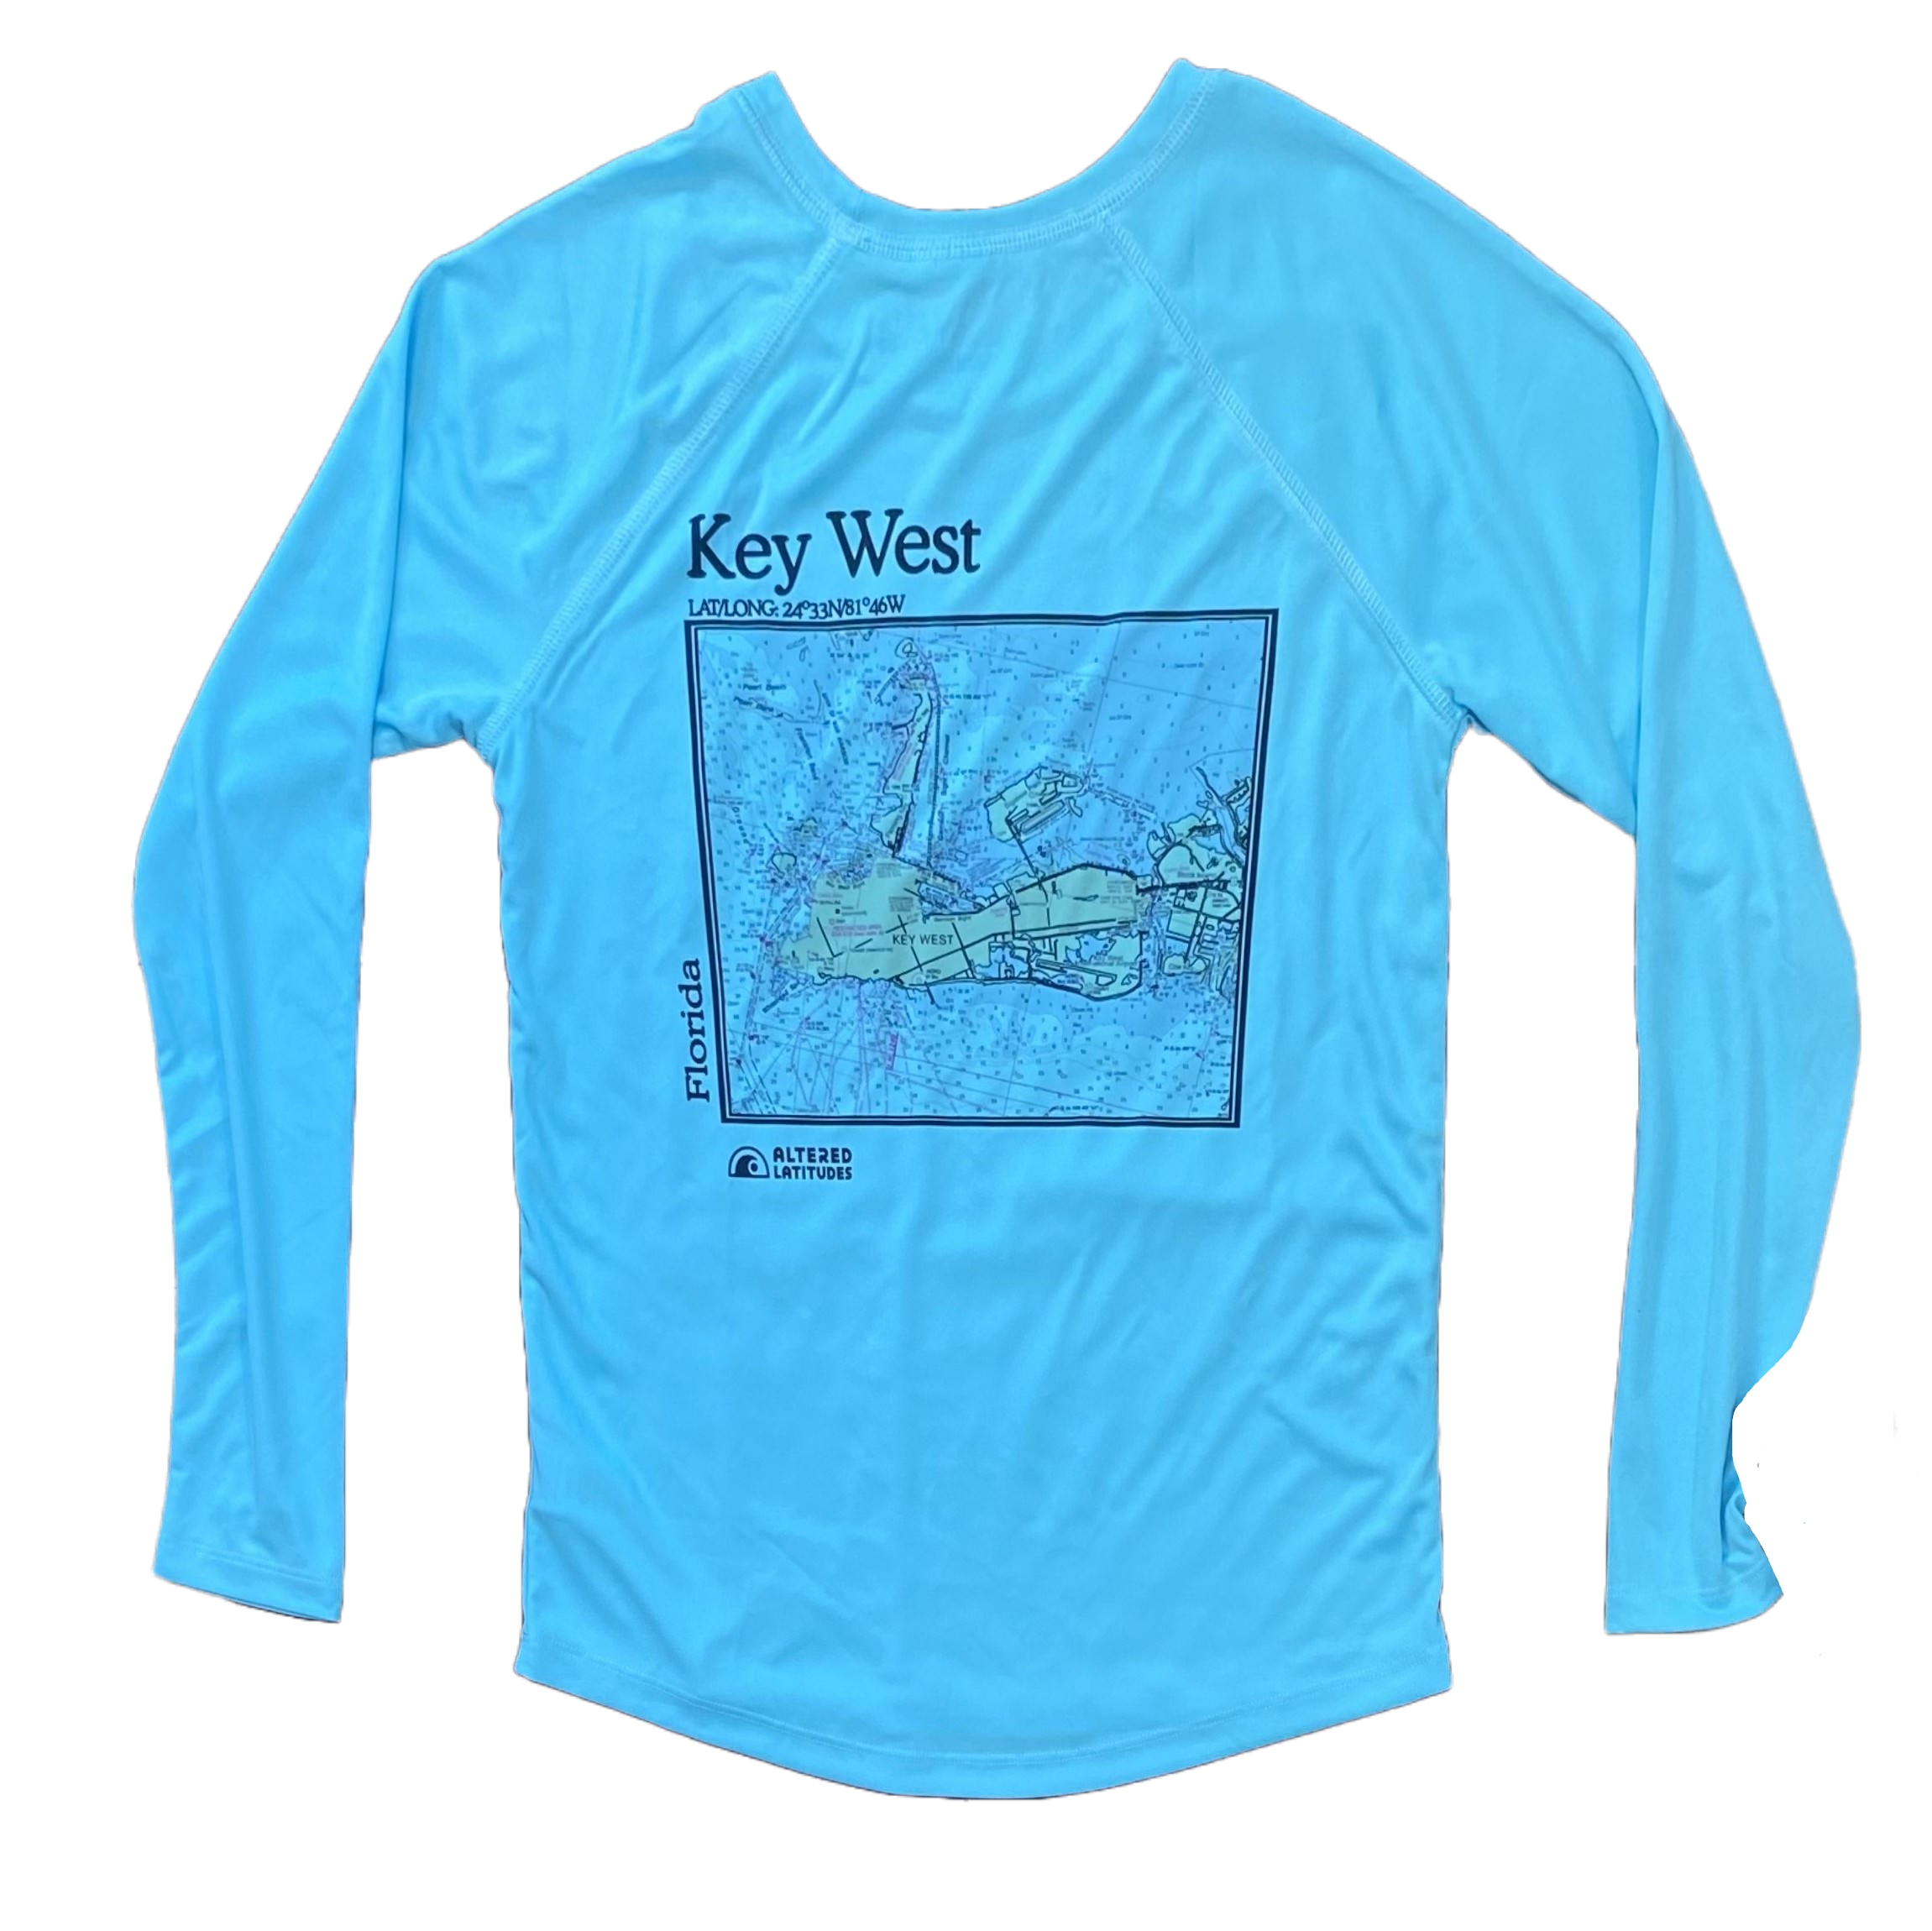 Florida Keys Key West Ocean Boat Sport Fishing Shirt UPF 50 Long Sleeve T- shirt Sun UV Protection Front or Back -  Canada